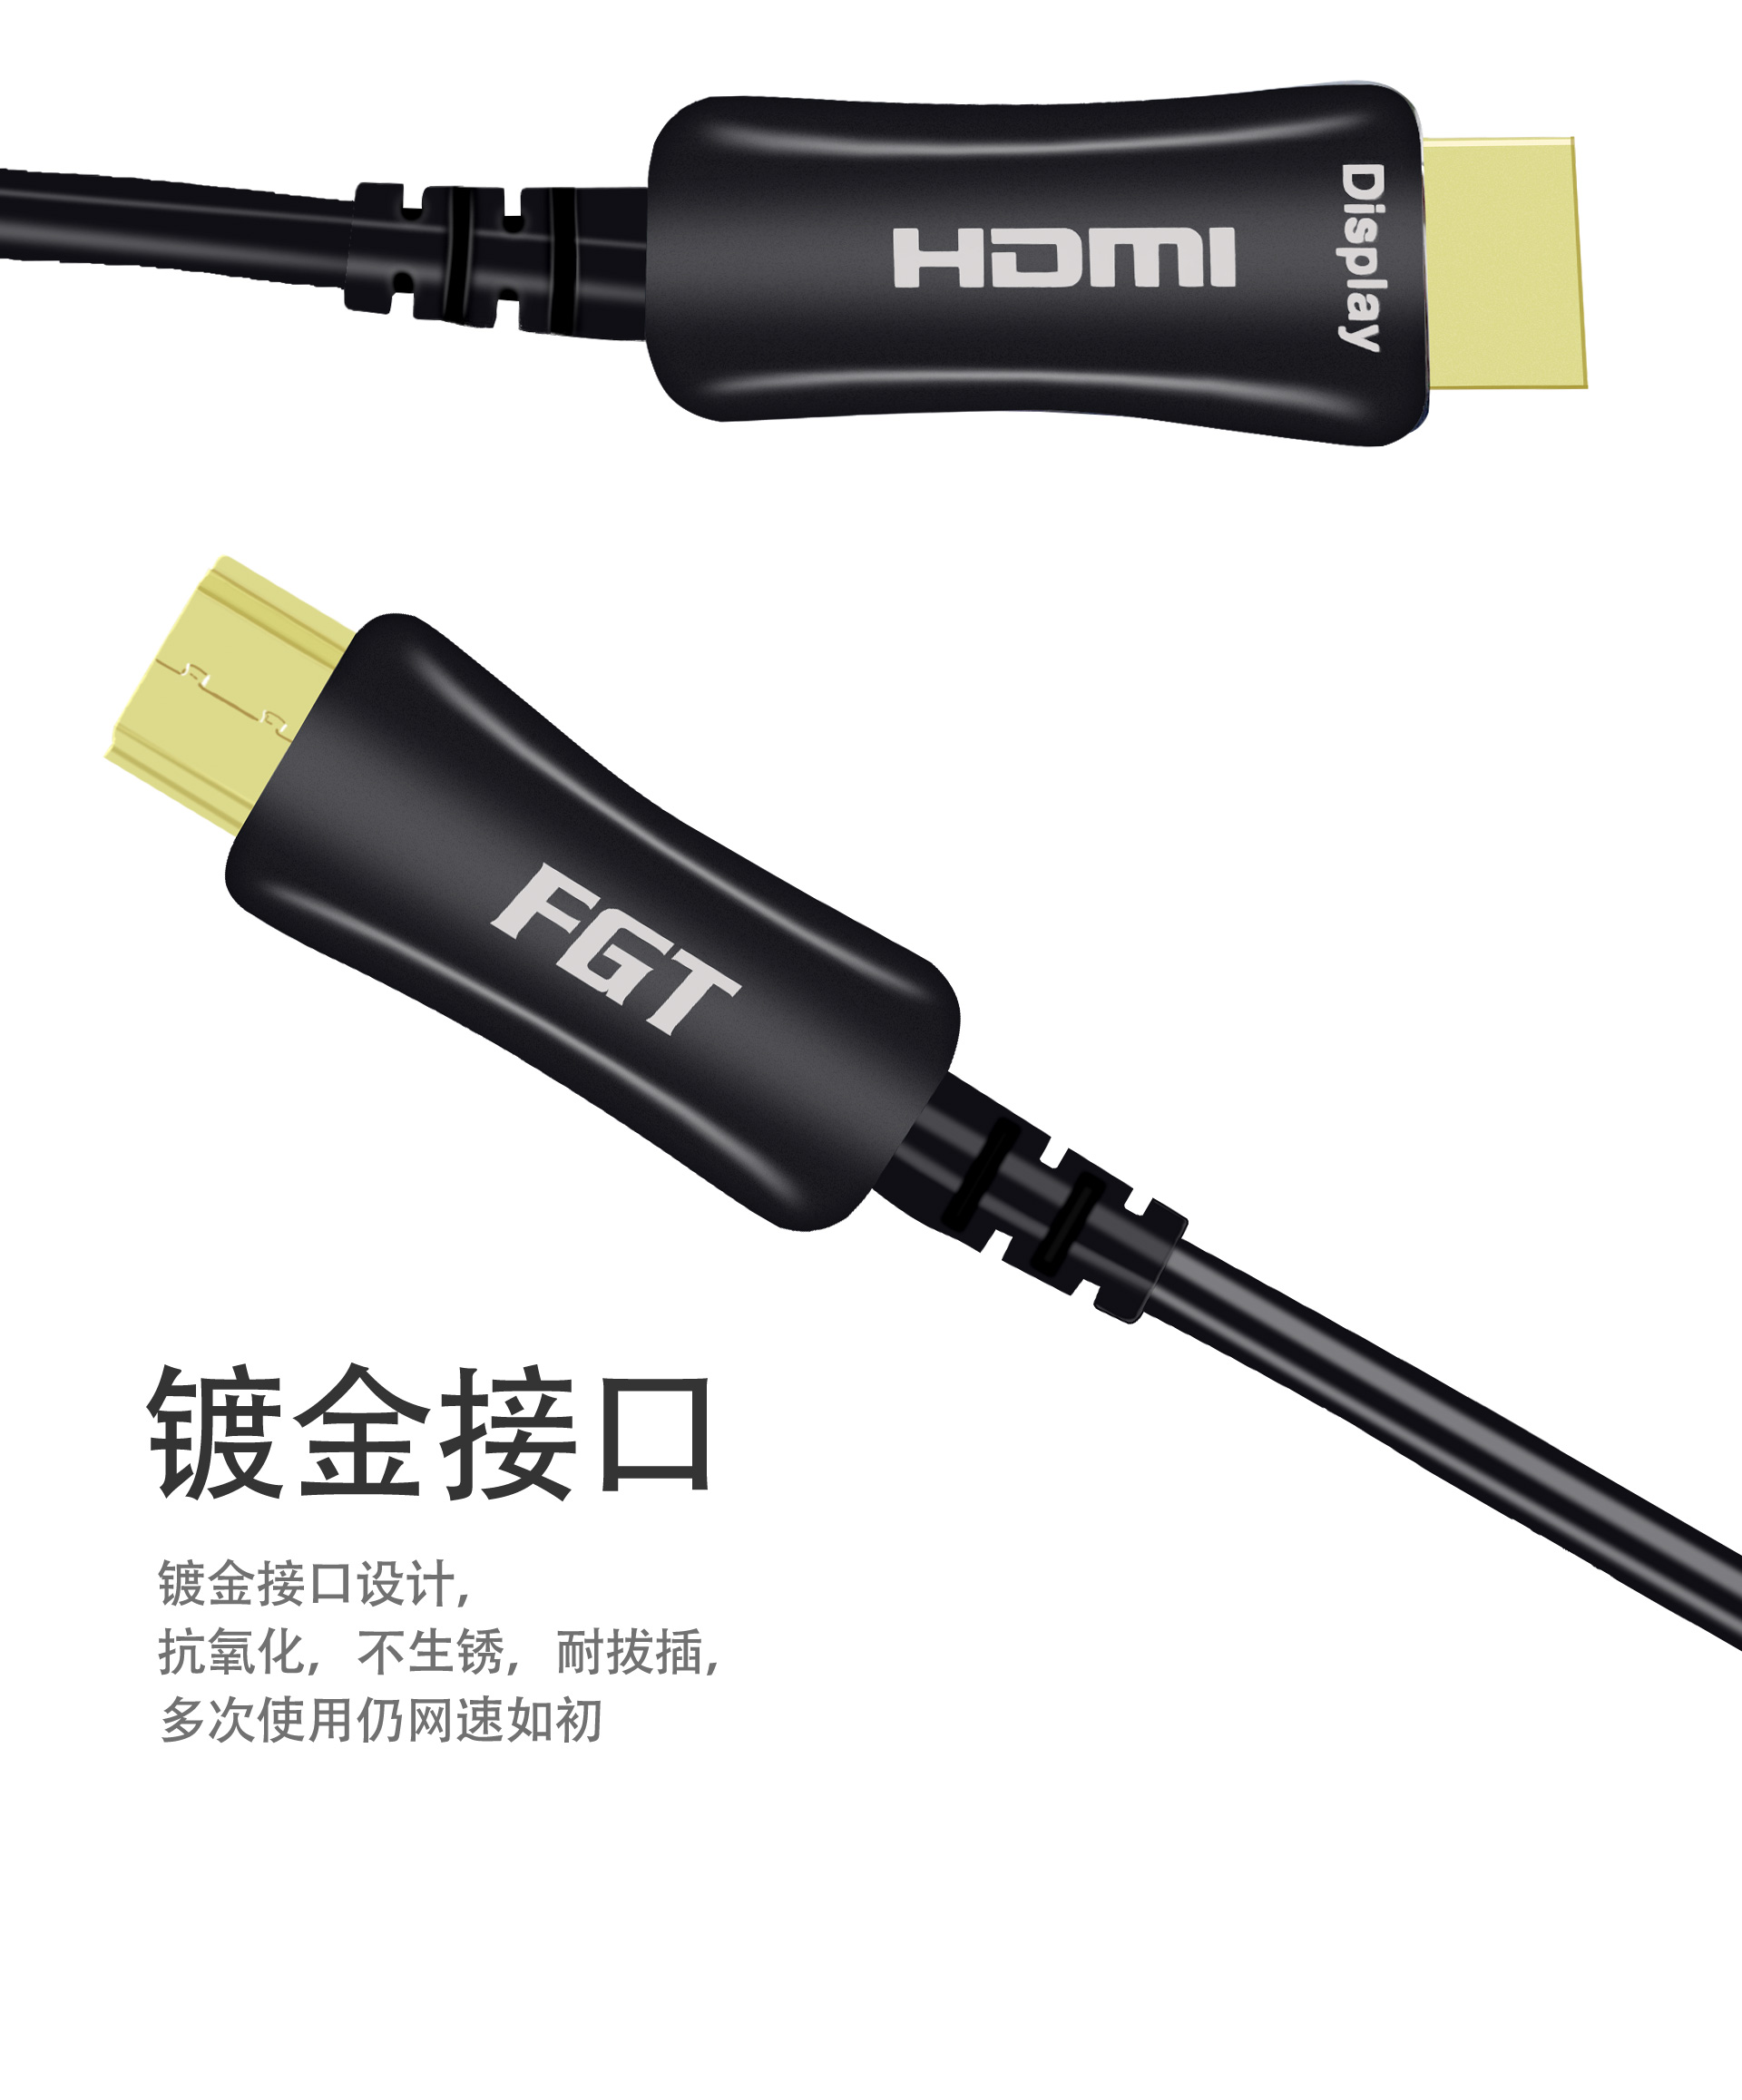 HDMI详情页_07.jpg